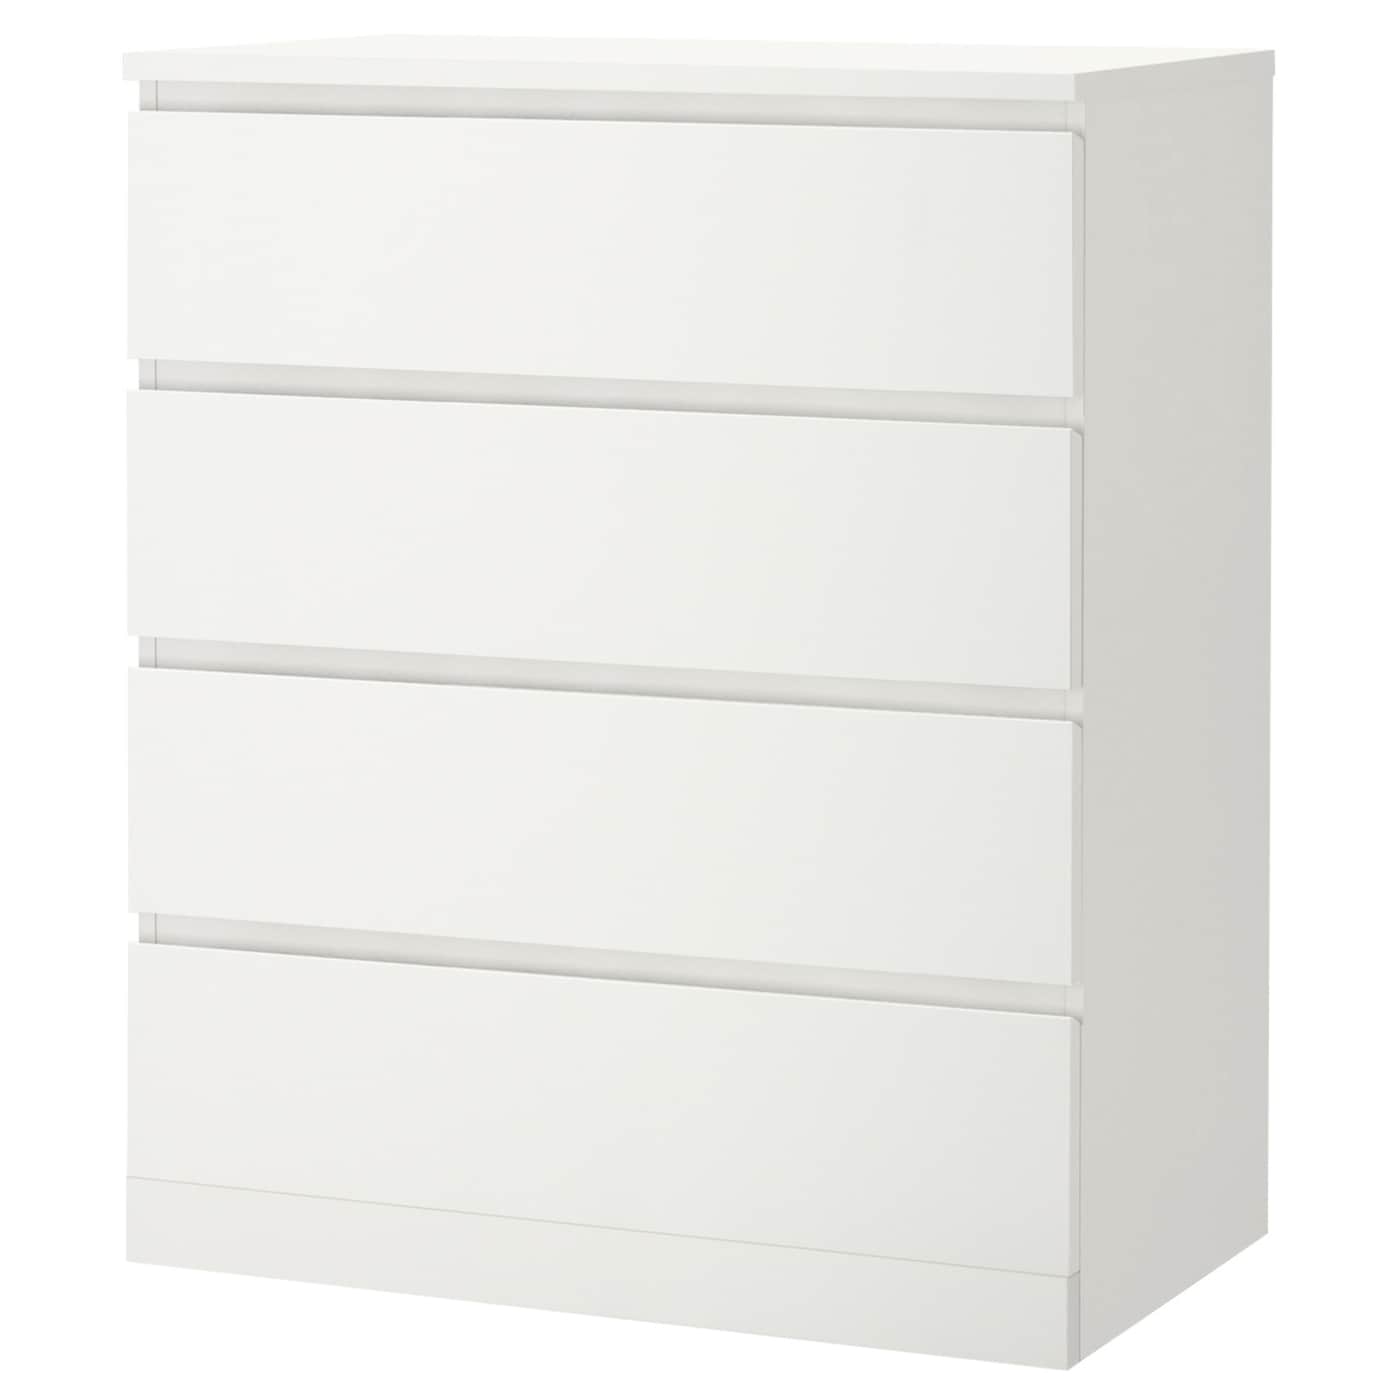 Комод с 4 ящиками - IKEA MALM, 80x100х48 см, белый МАЛЬМ ИКЕА